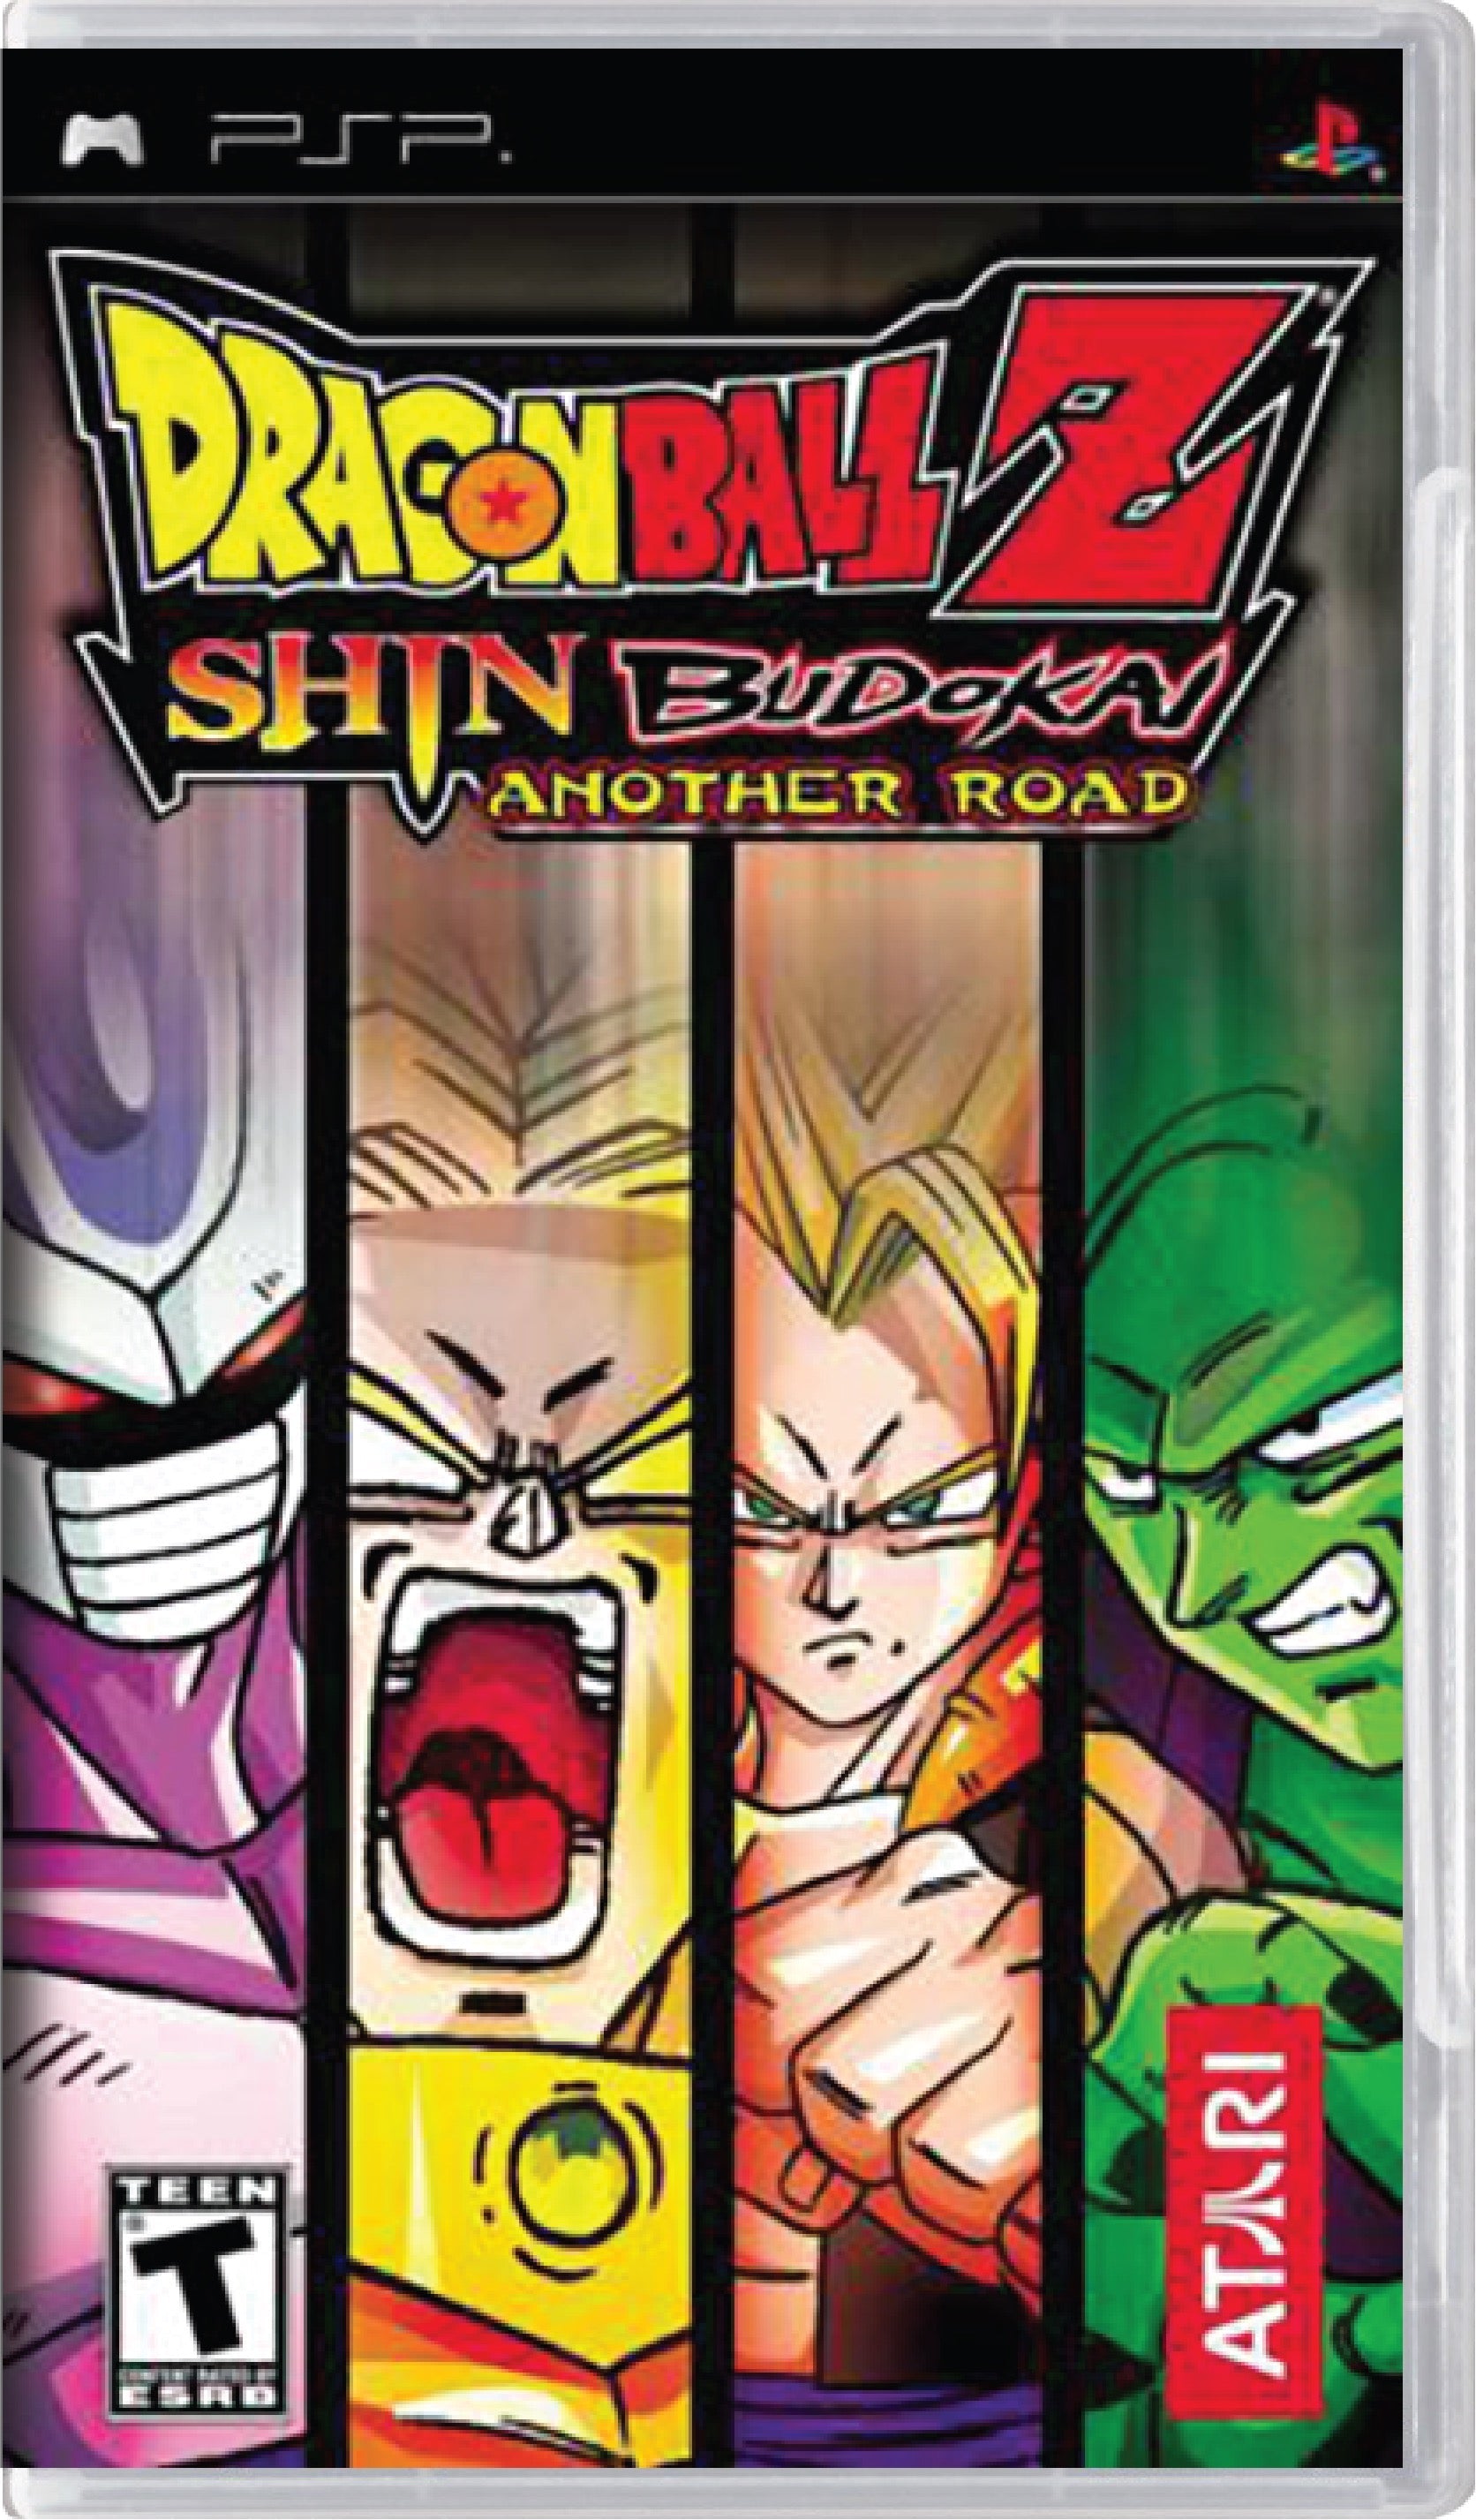 Dragon Ball Z Shin Budokai Another Road Cover Art